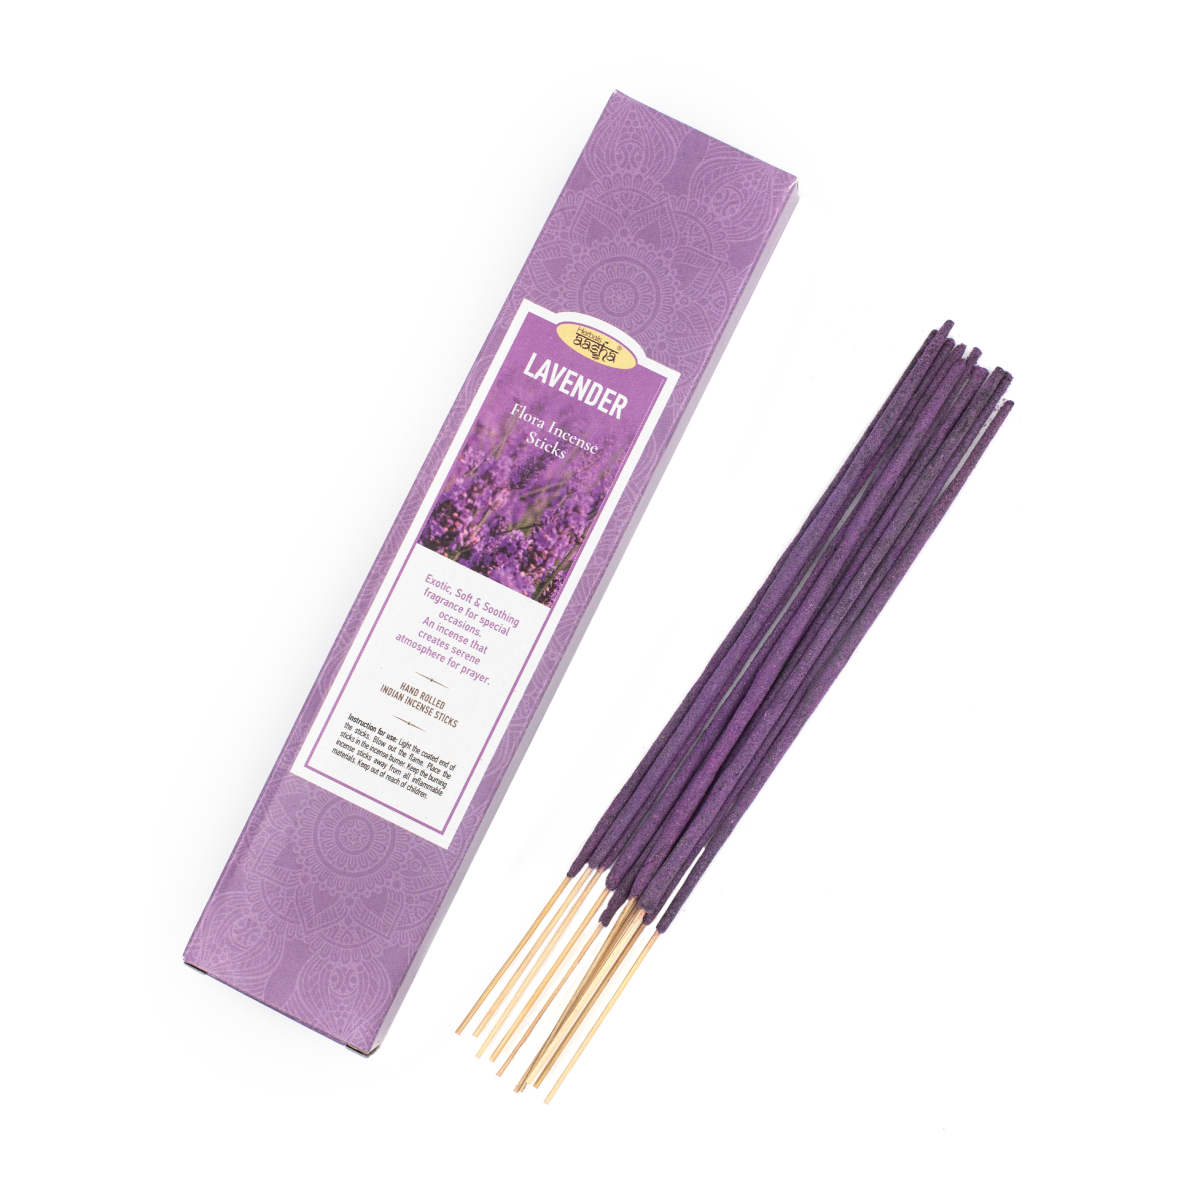 Ароматические палочки Aasha Herbals Лаванда (Lavender), 10 шт ароматизатор в баночке car freshner fiber can lavender лаванда ufc 17835 24